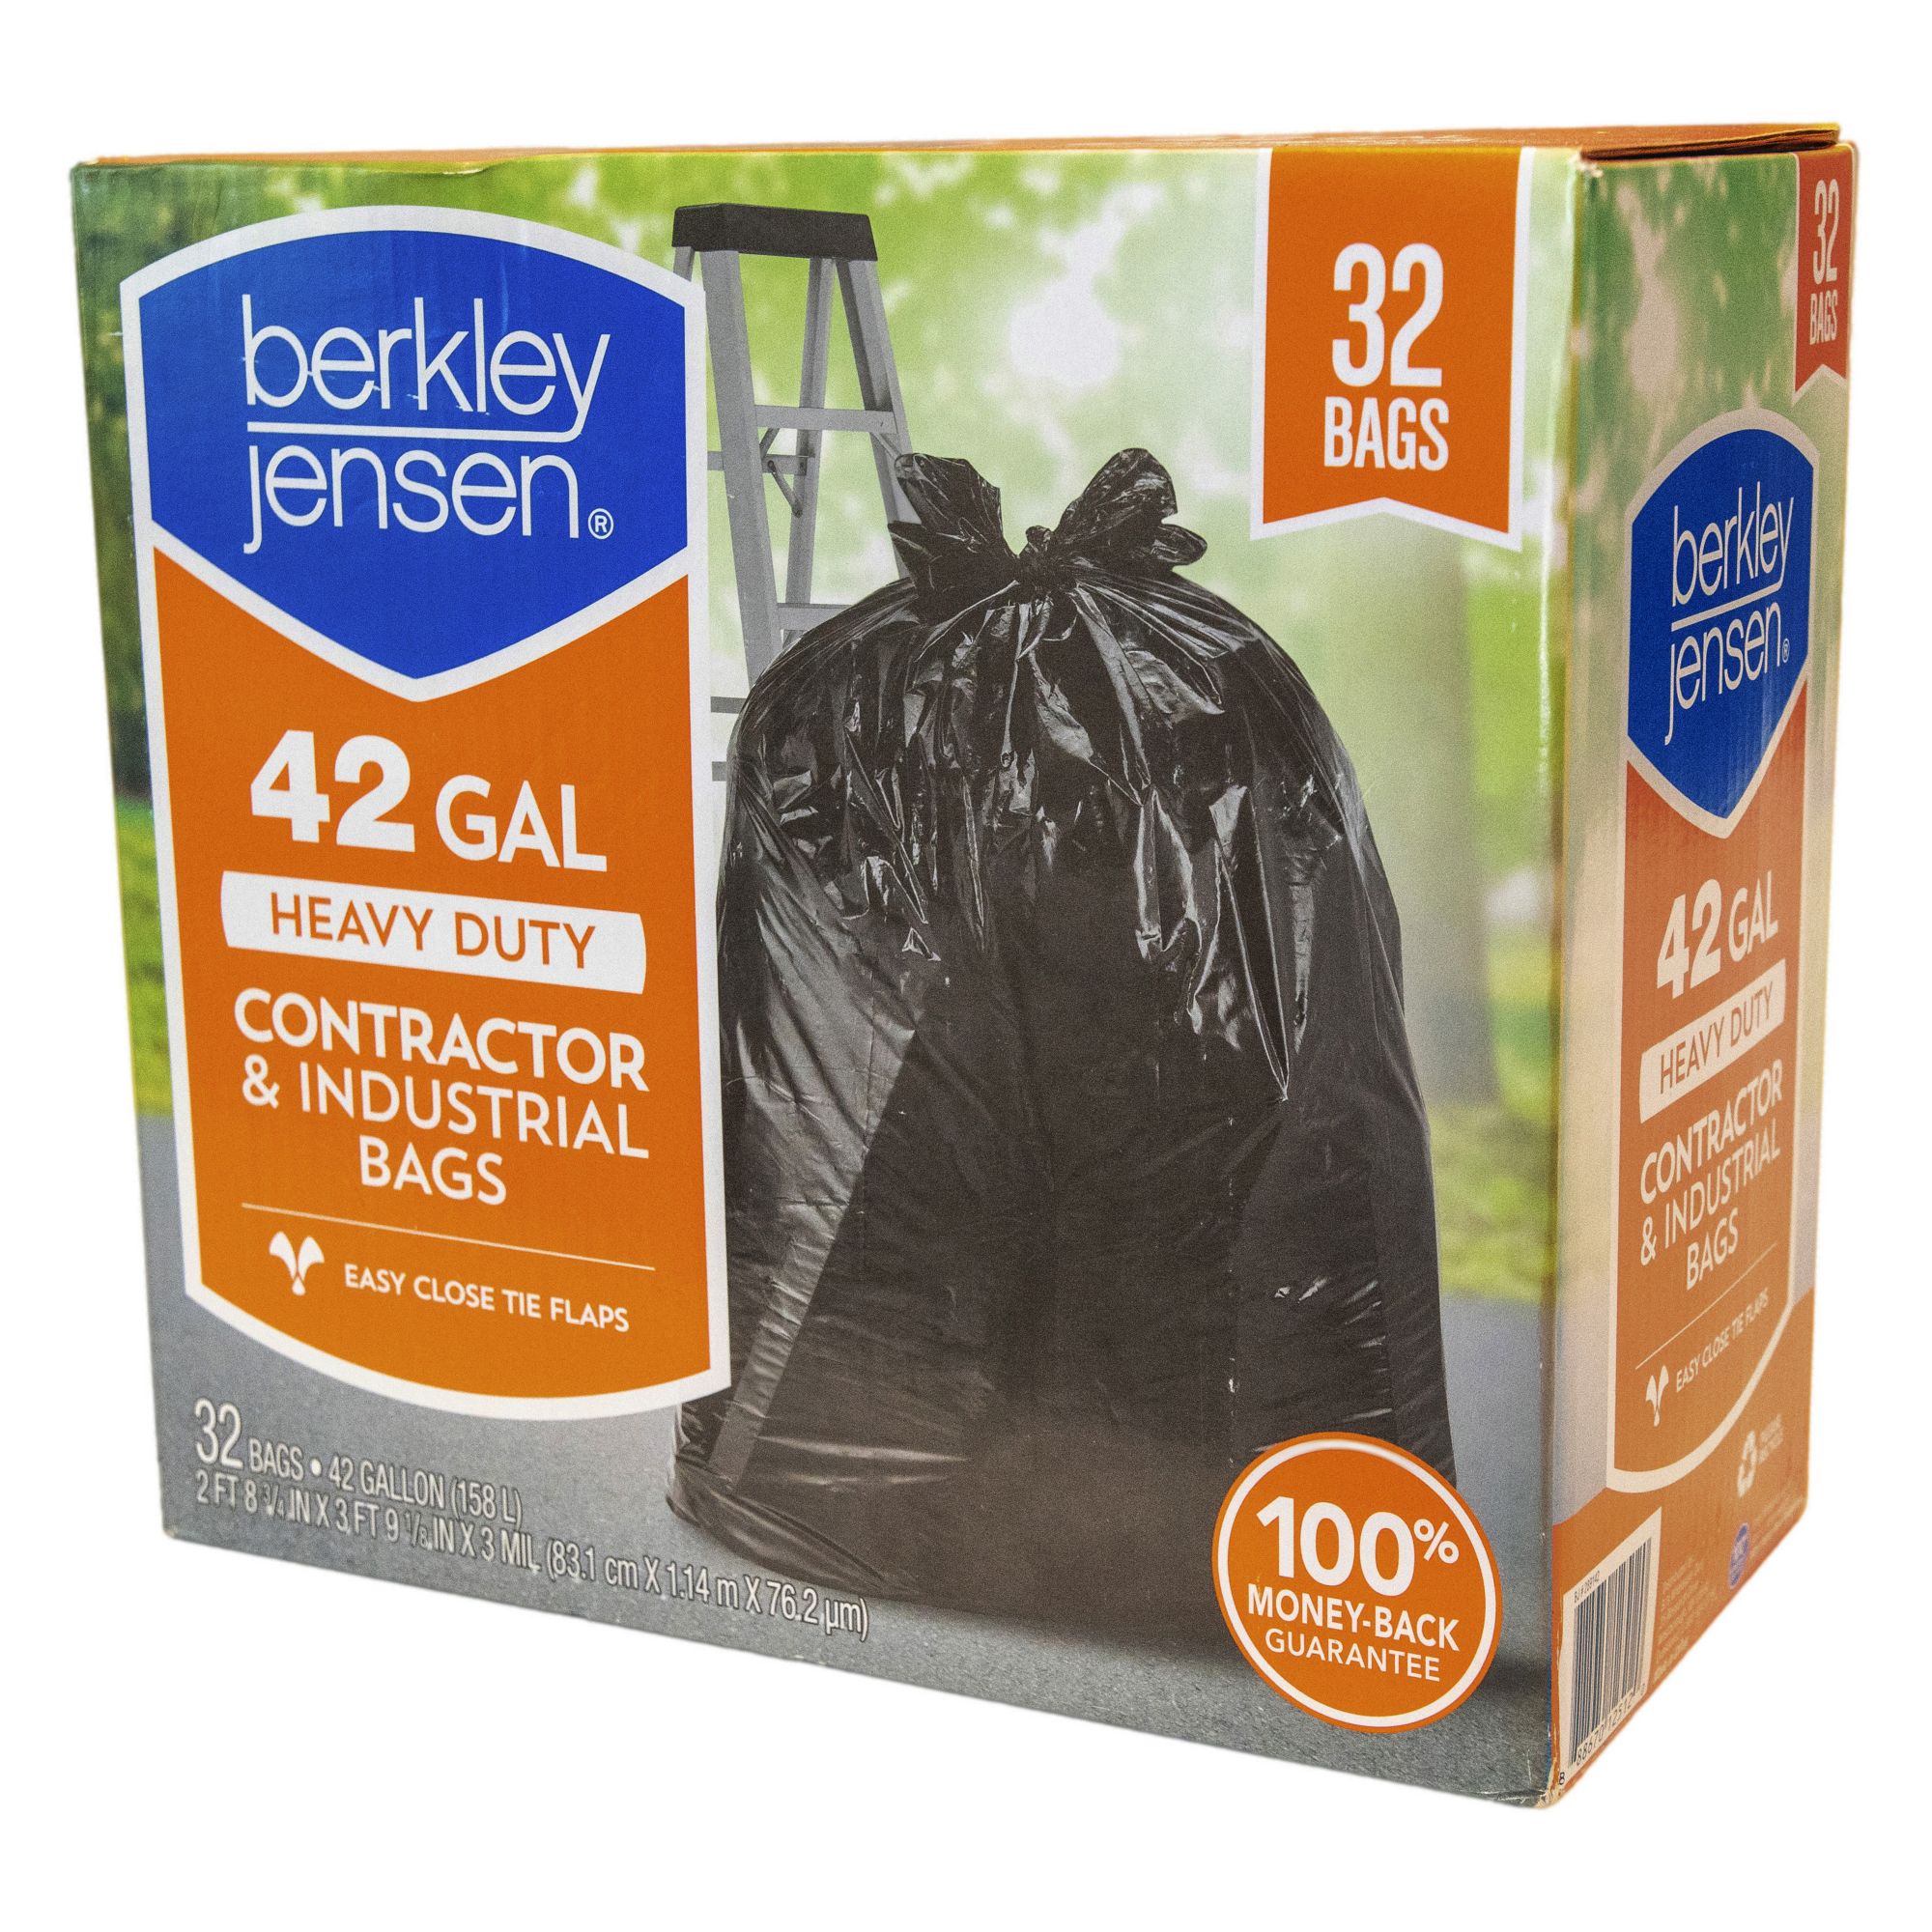 Berkley Jensen Drawstring Tall Kitchen Bags - 200 ct